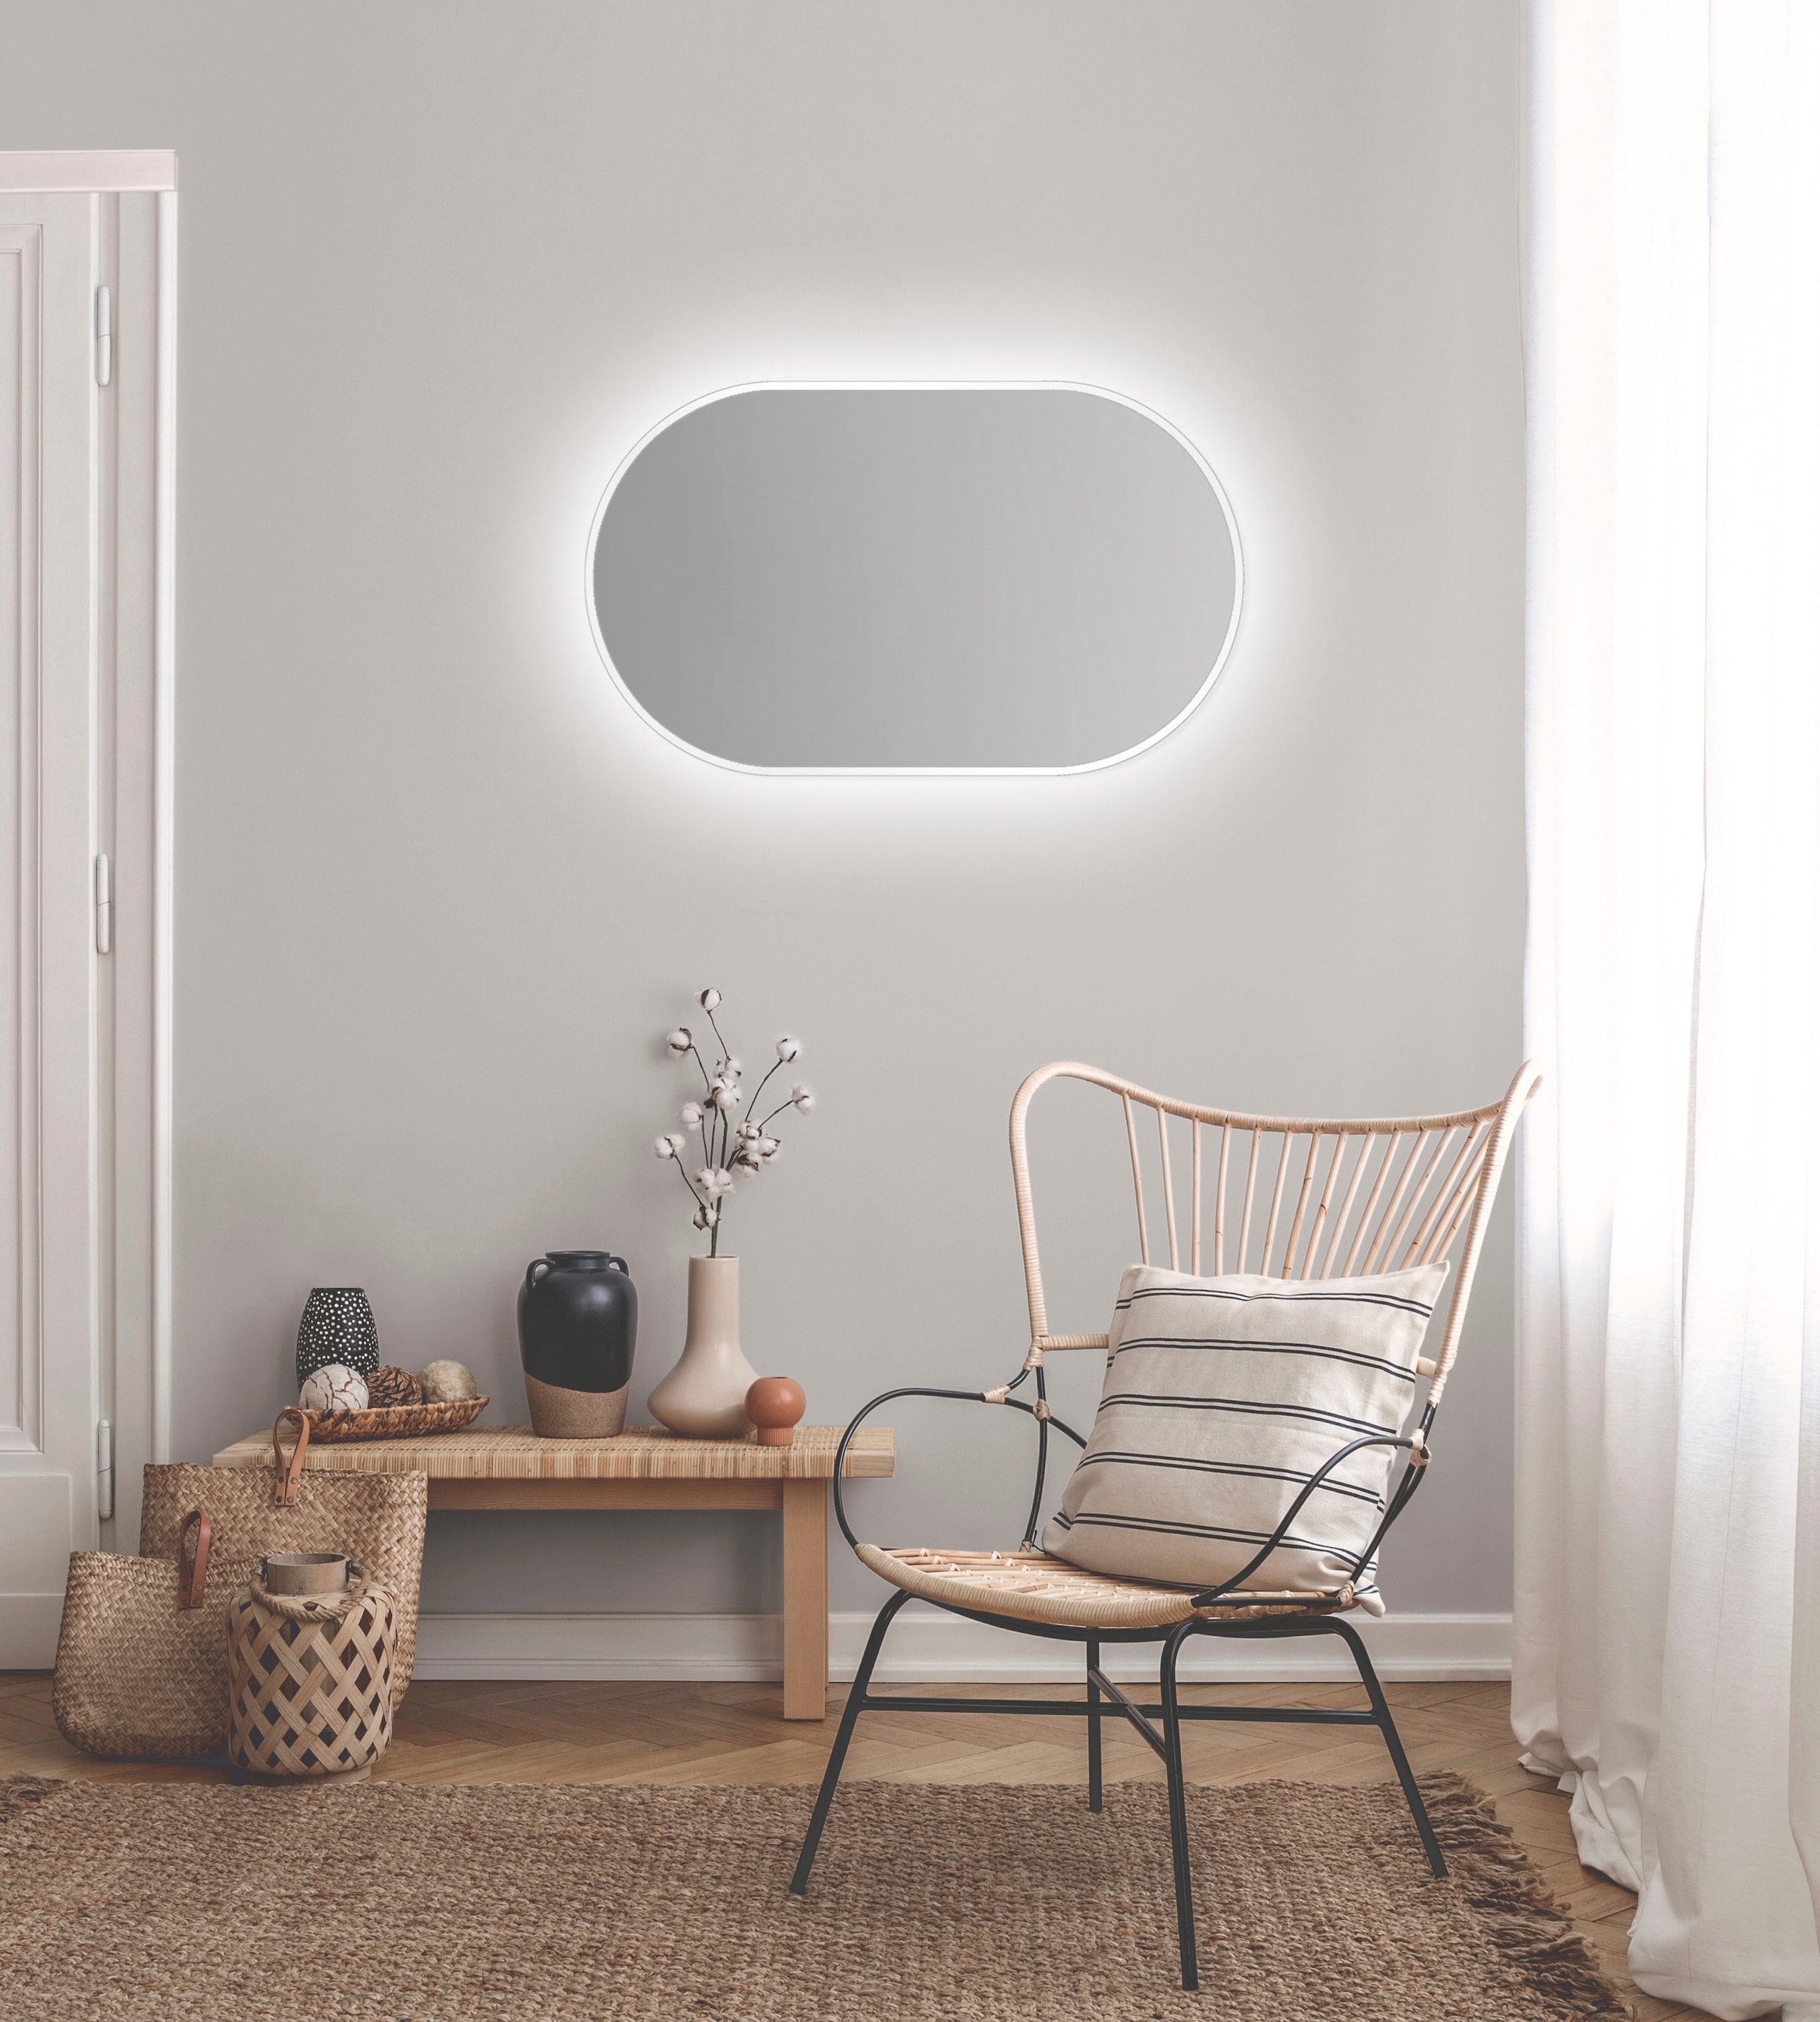 Talos Dekospiegel »LED Design Spiegel oval weiß, 45x75 cm«, (1 St.), LED Beleuchtung